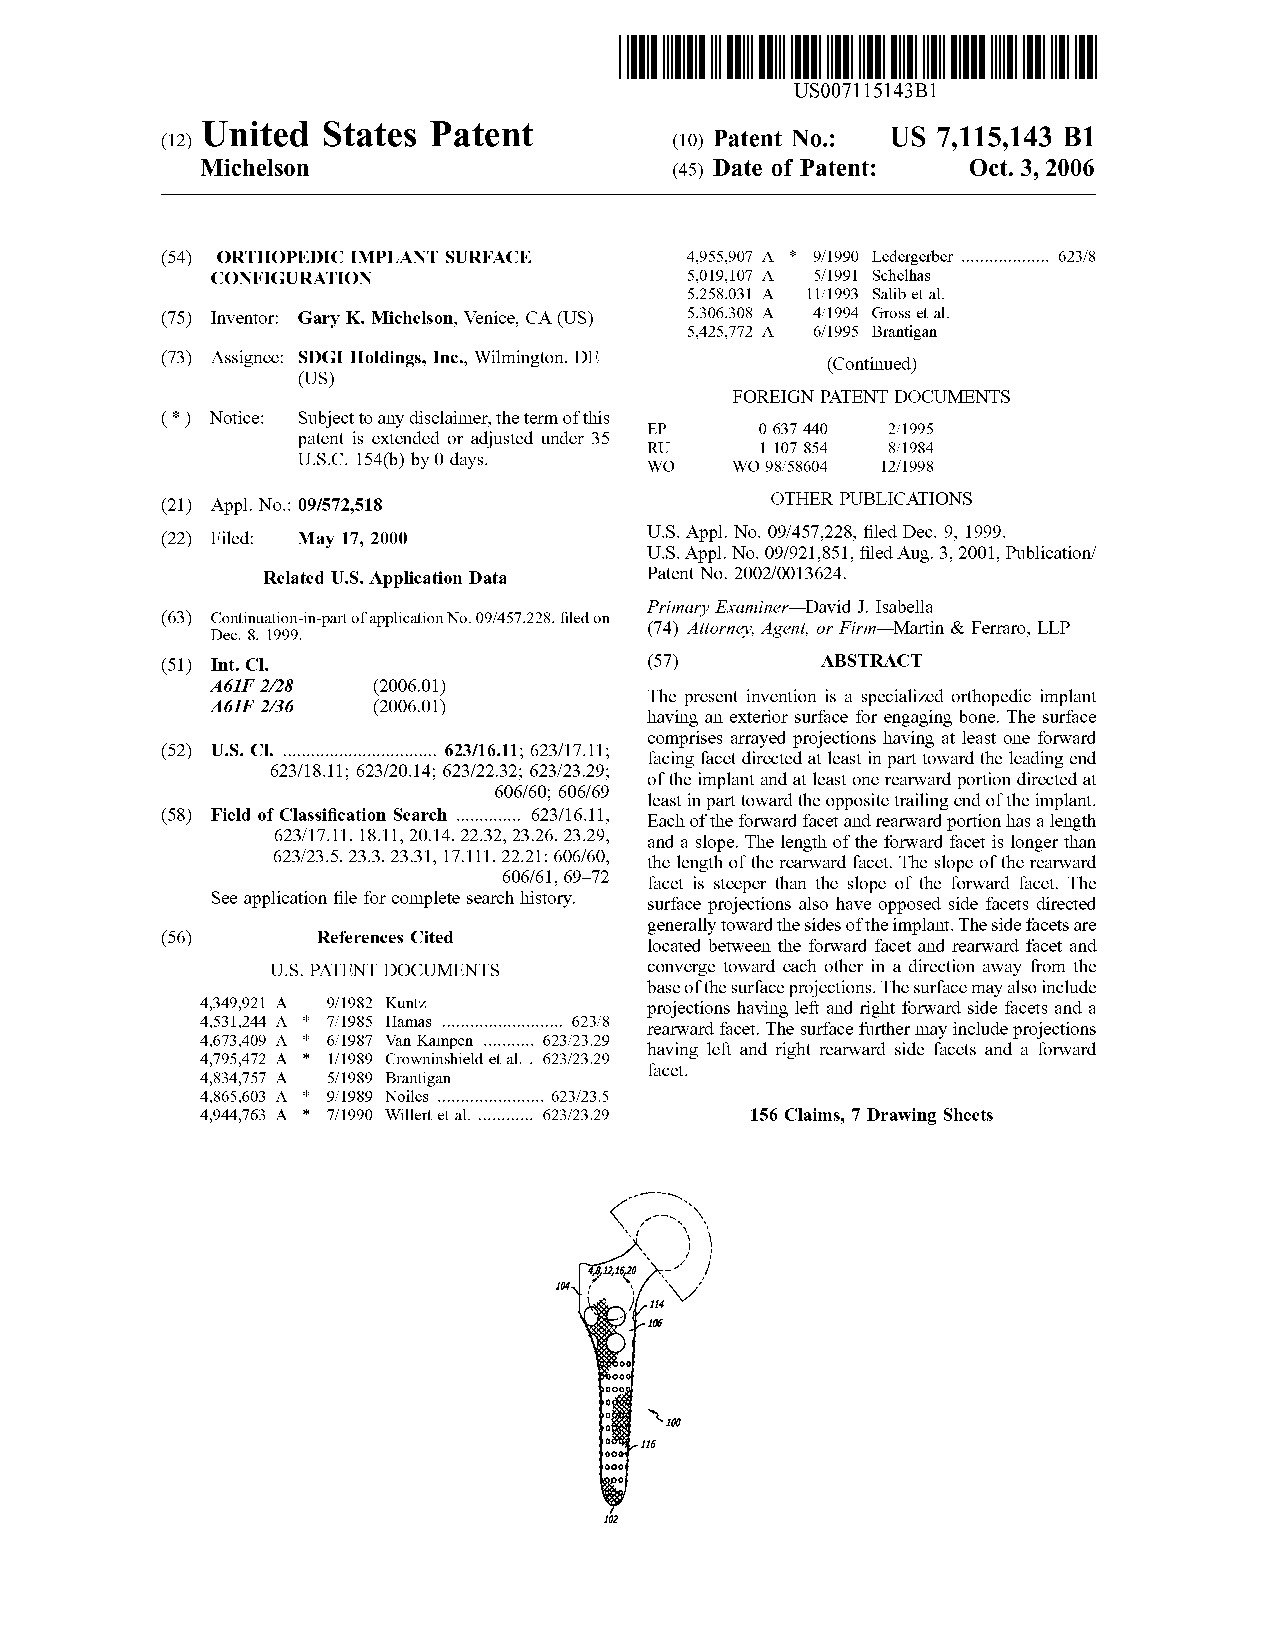 Orthopedic implant surface configuration - Patent 7,115,143